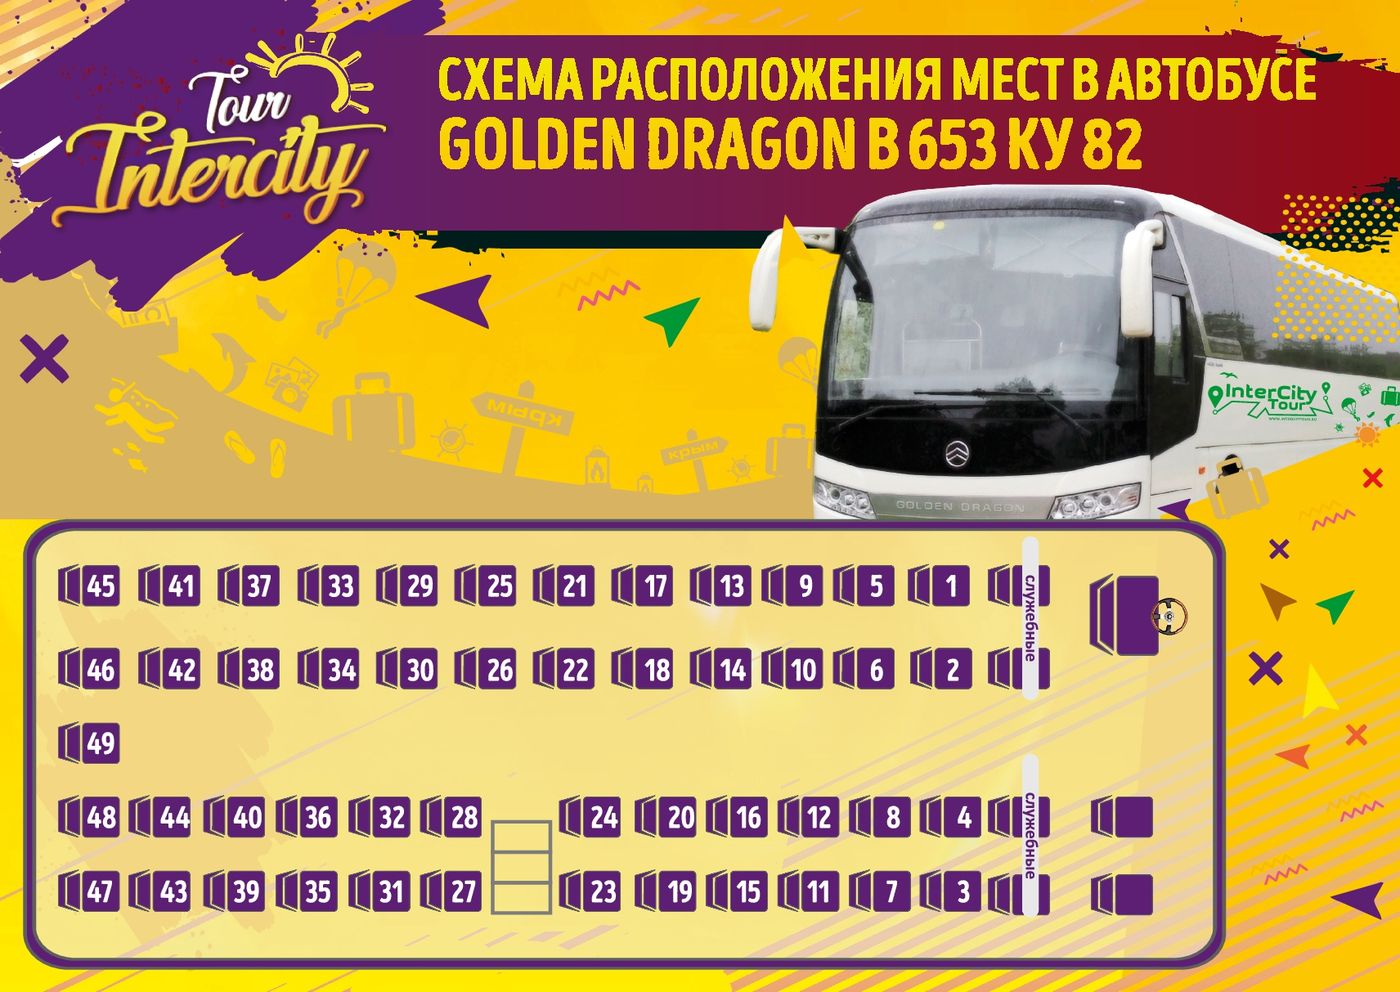 Межгород маршрутки. Автобус Golden Dragon 39 мест. Расположение мест в автобусе. Места в автобусе схема. Расположение мест в междугороднем автобусе схема.